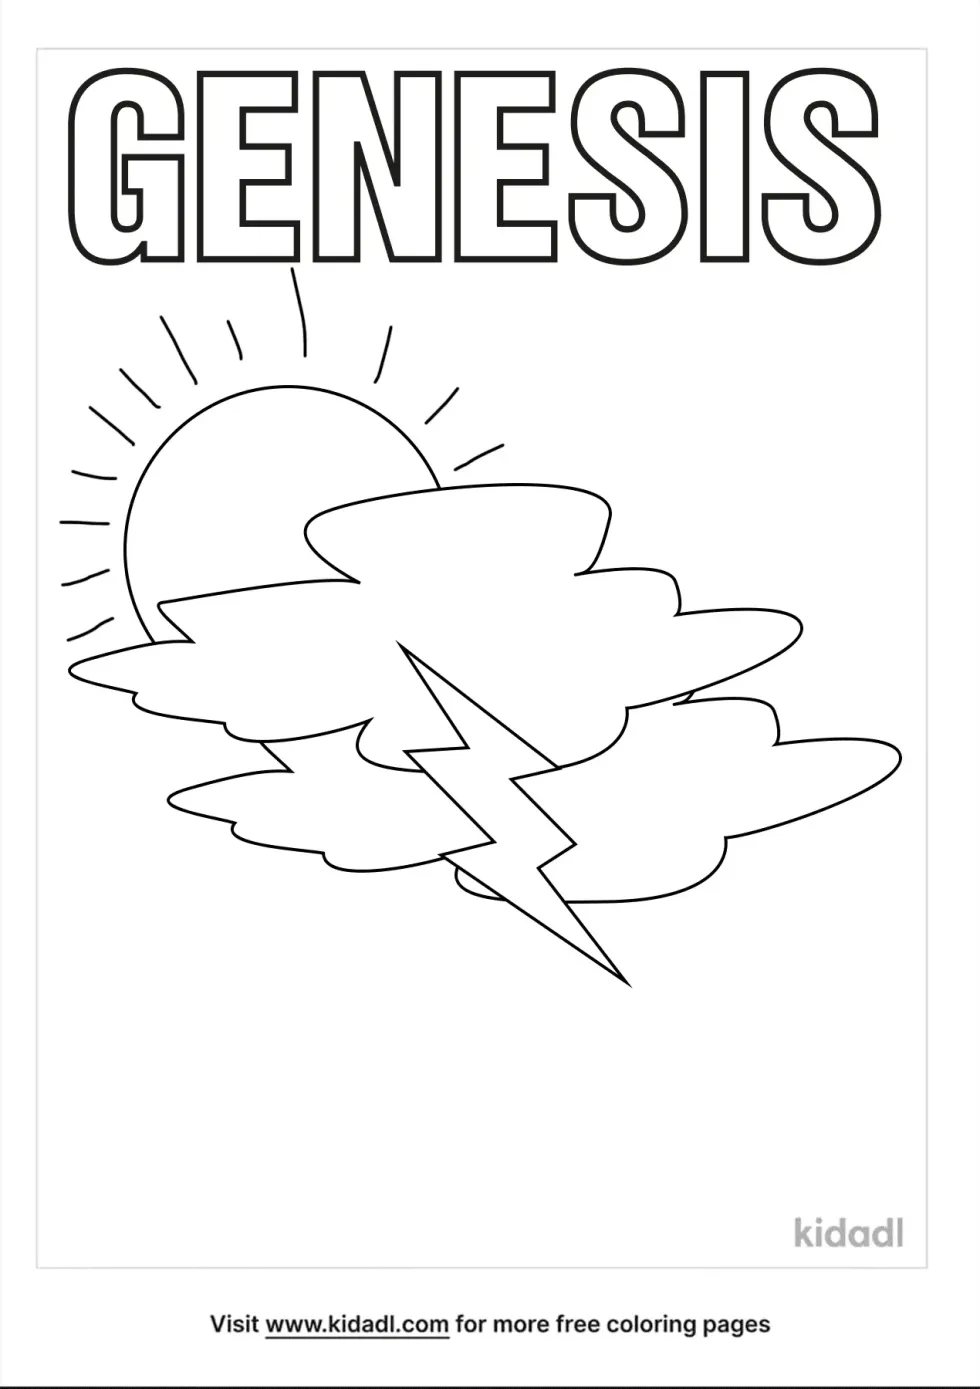 Genesis Coloring Page